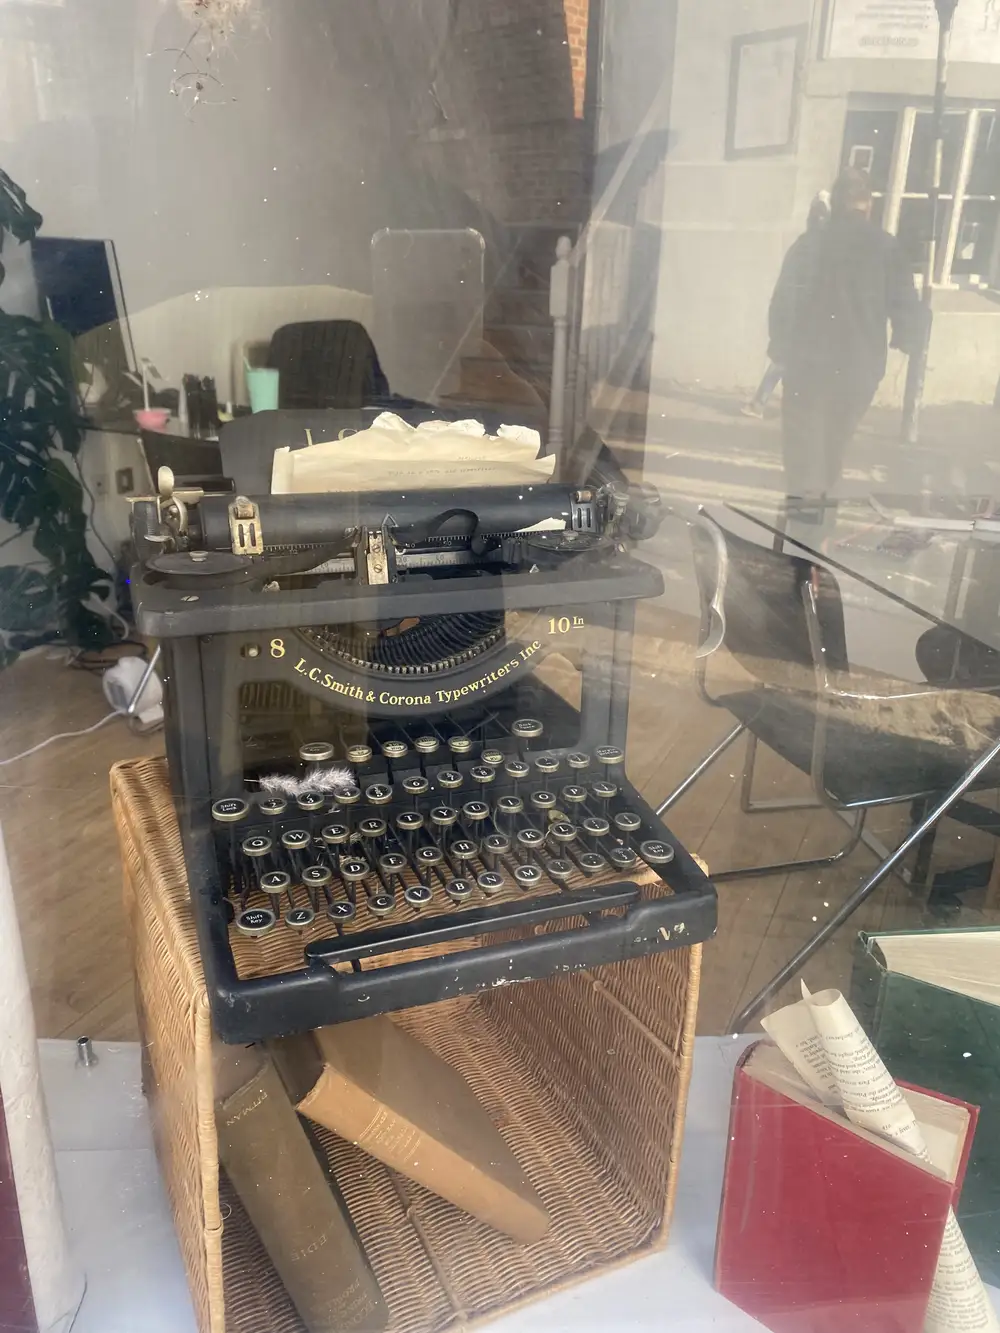 A glassed typewriter